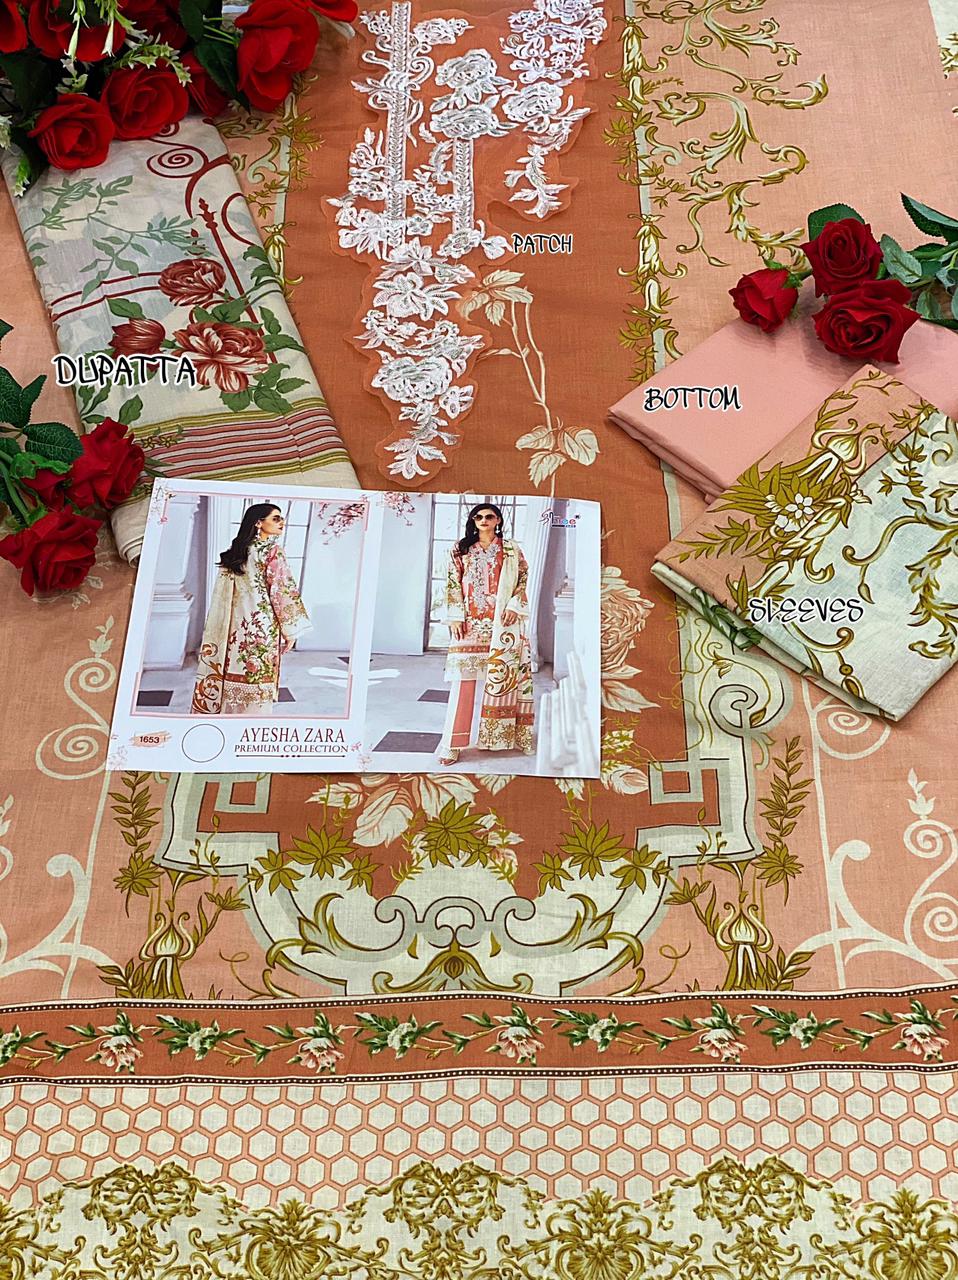 Pakistani Printed Cotton Suit Material for women with Chiffon Dupatta - Stilento